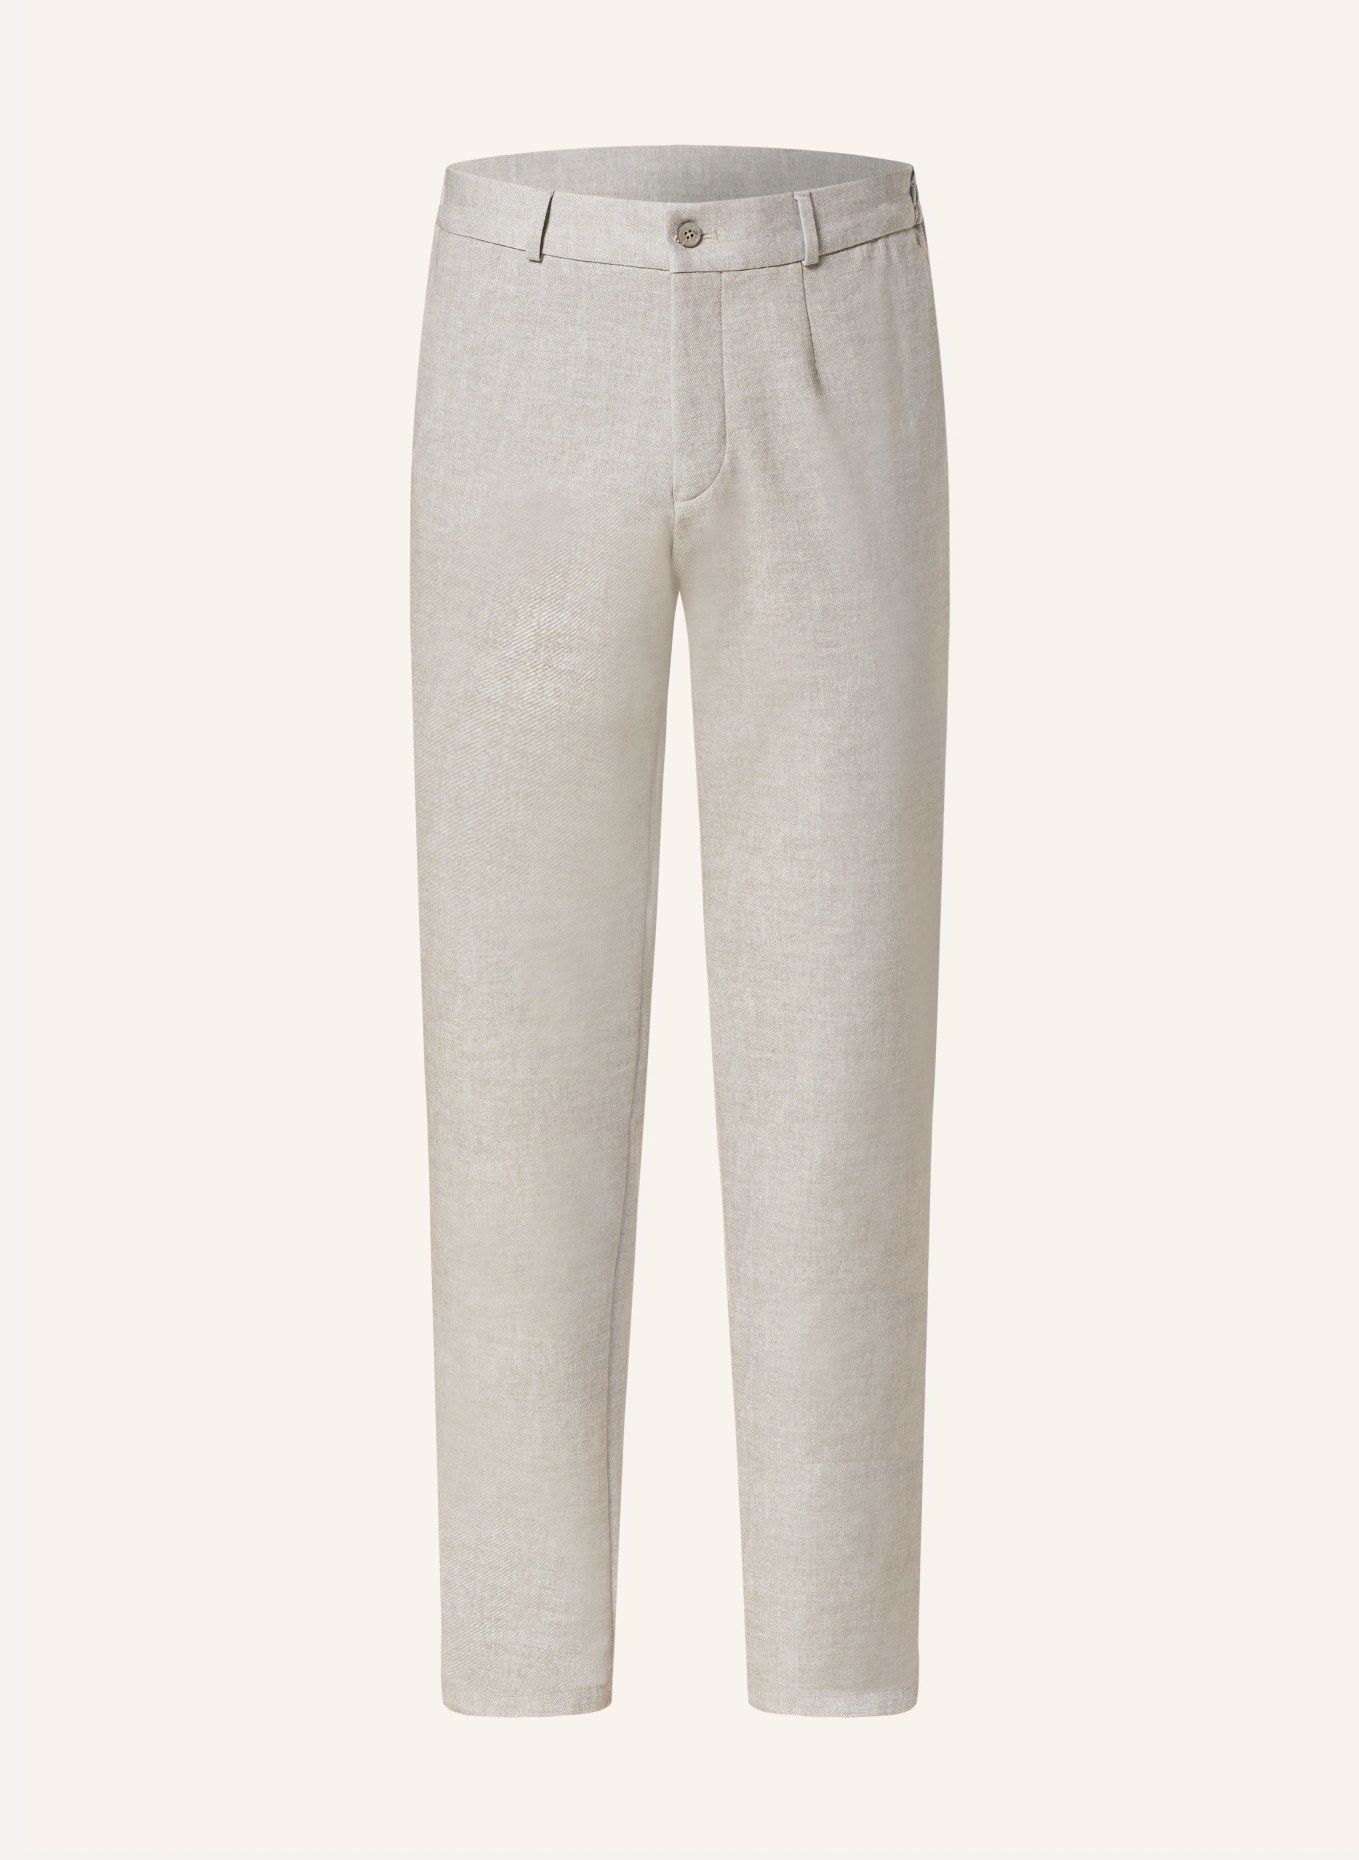 PAUL Anzughose Slim Fit aus Jersey, Farbe: 220 SAND (Bild 1)